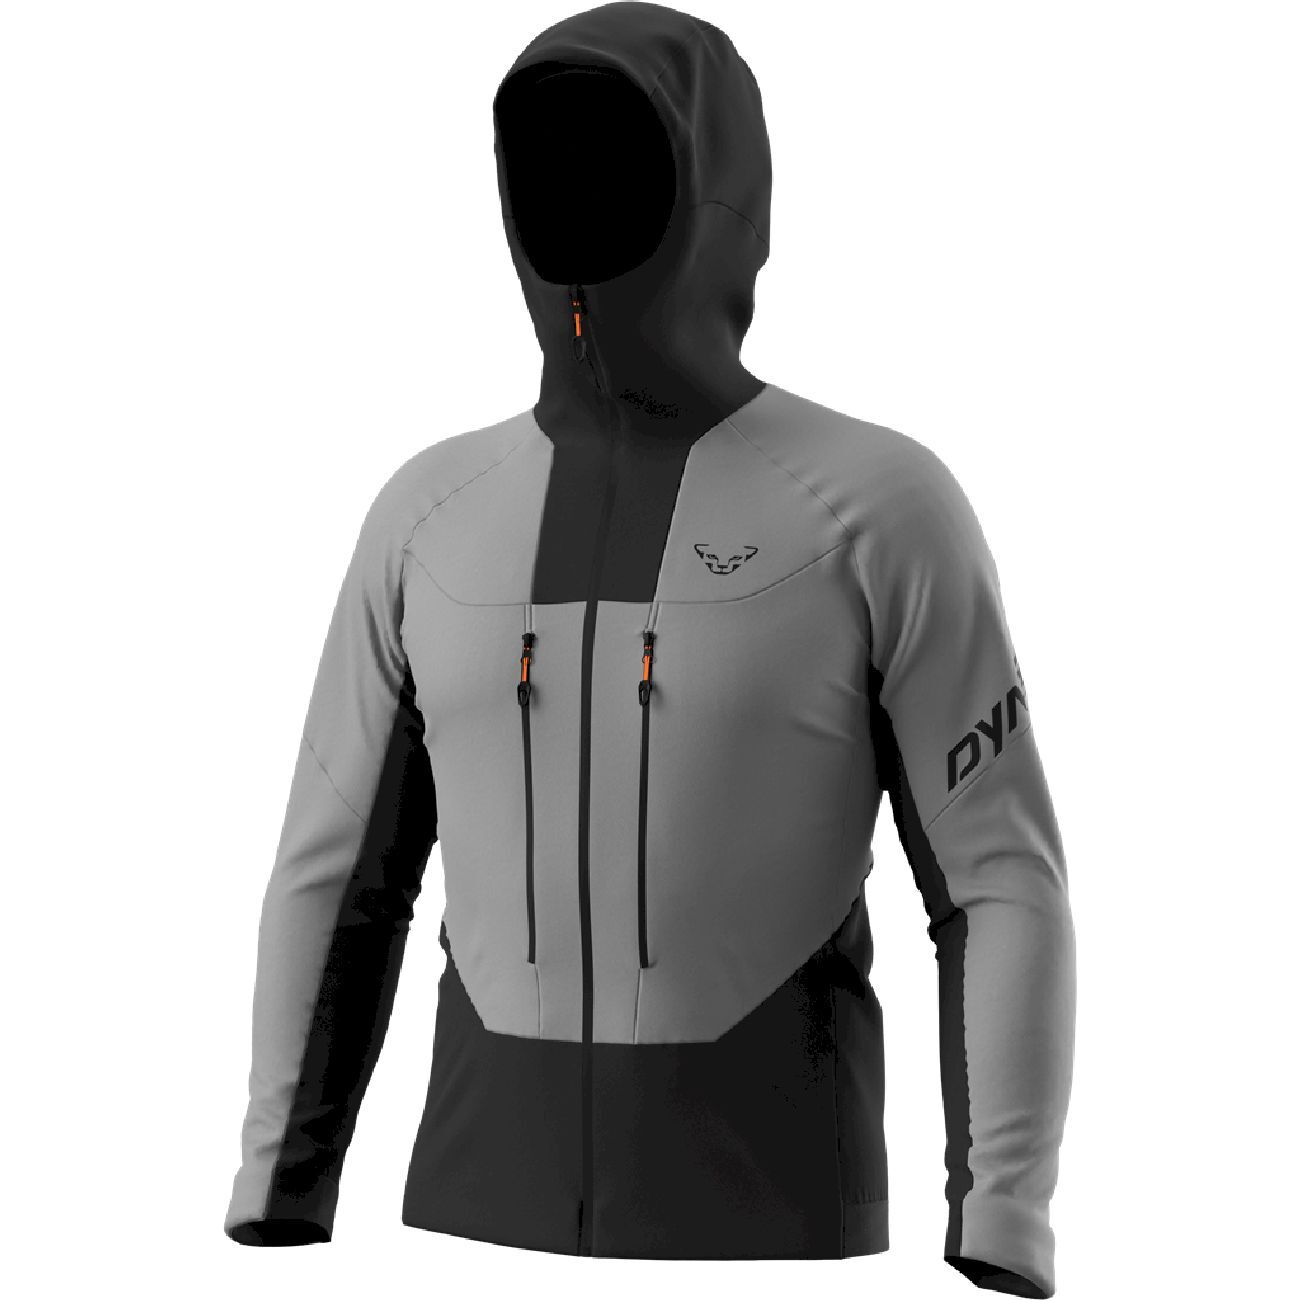 Dynafit TLT Dynastretch - Ski jacket - Men's